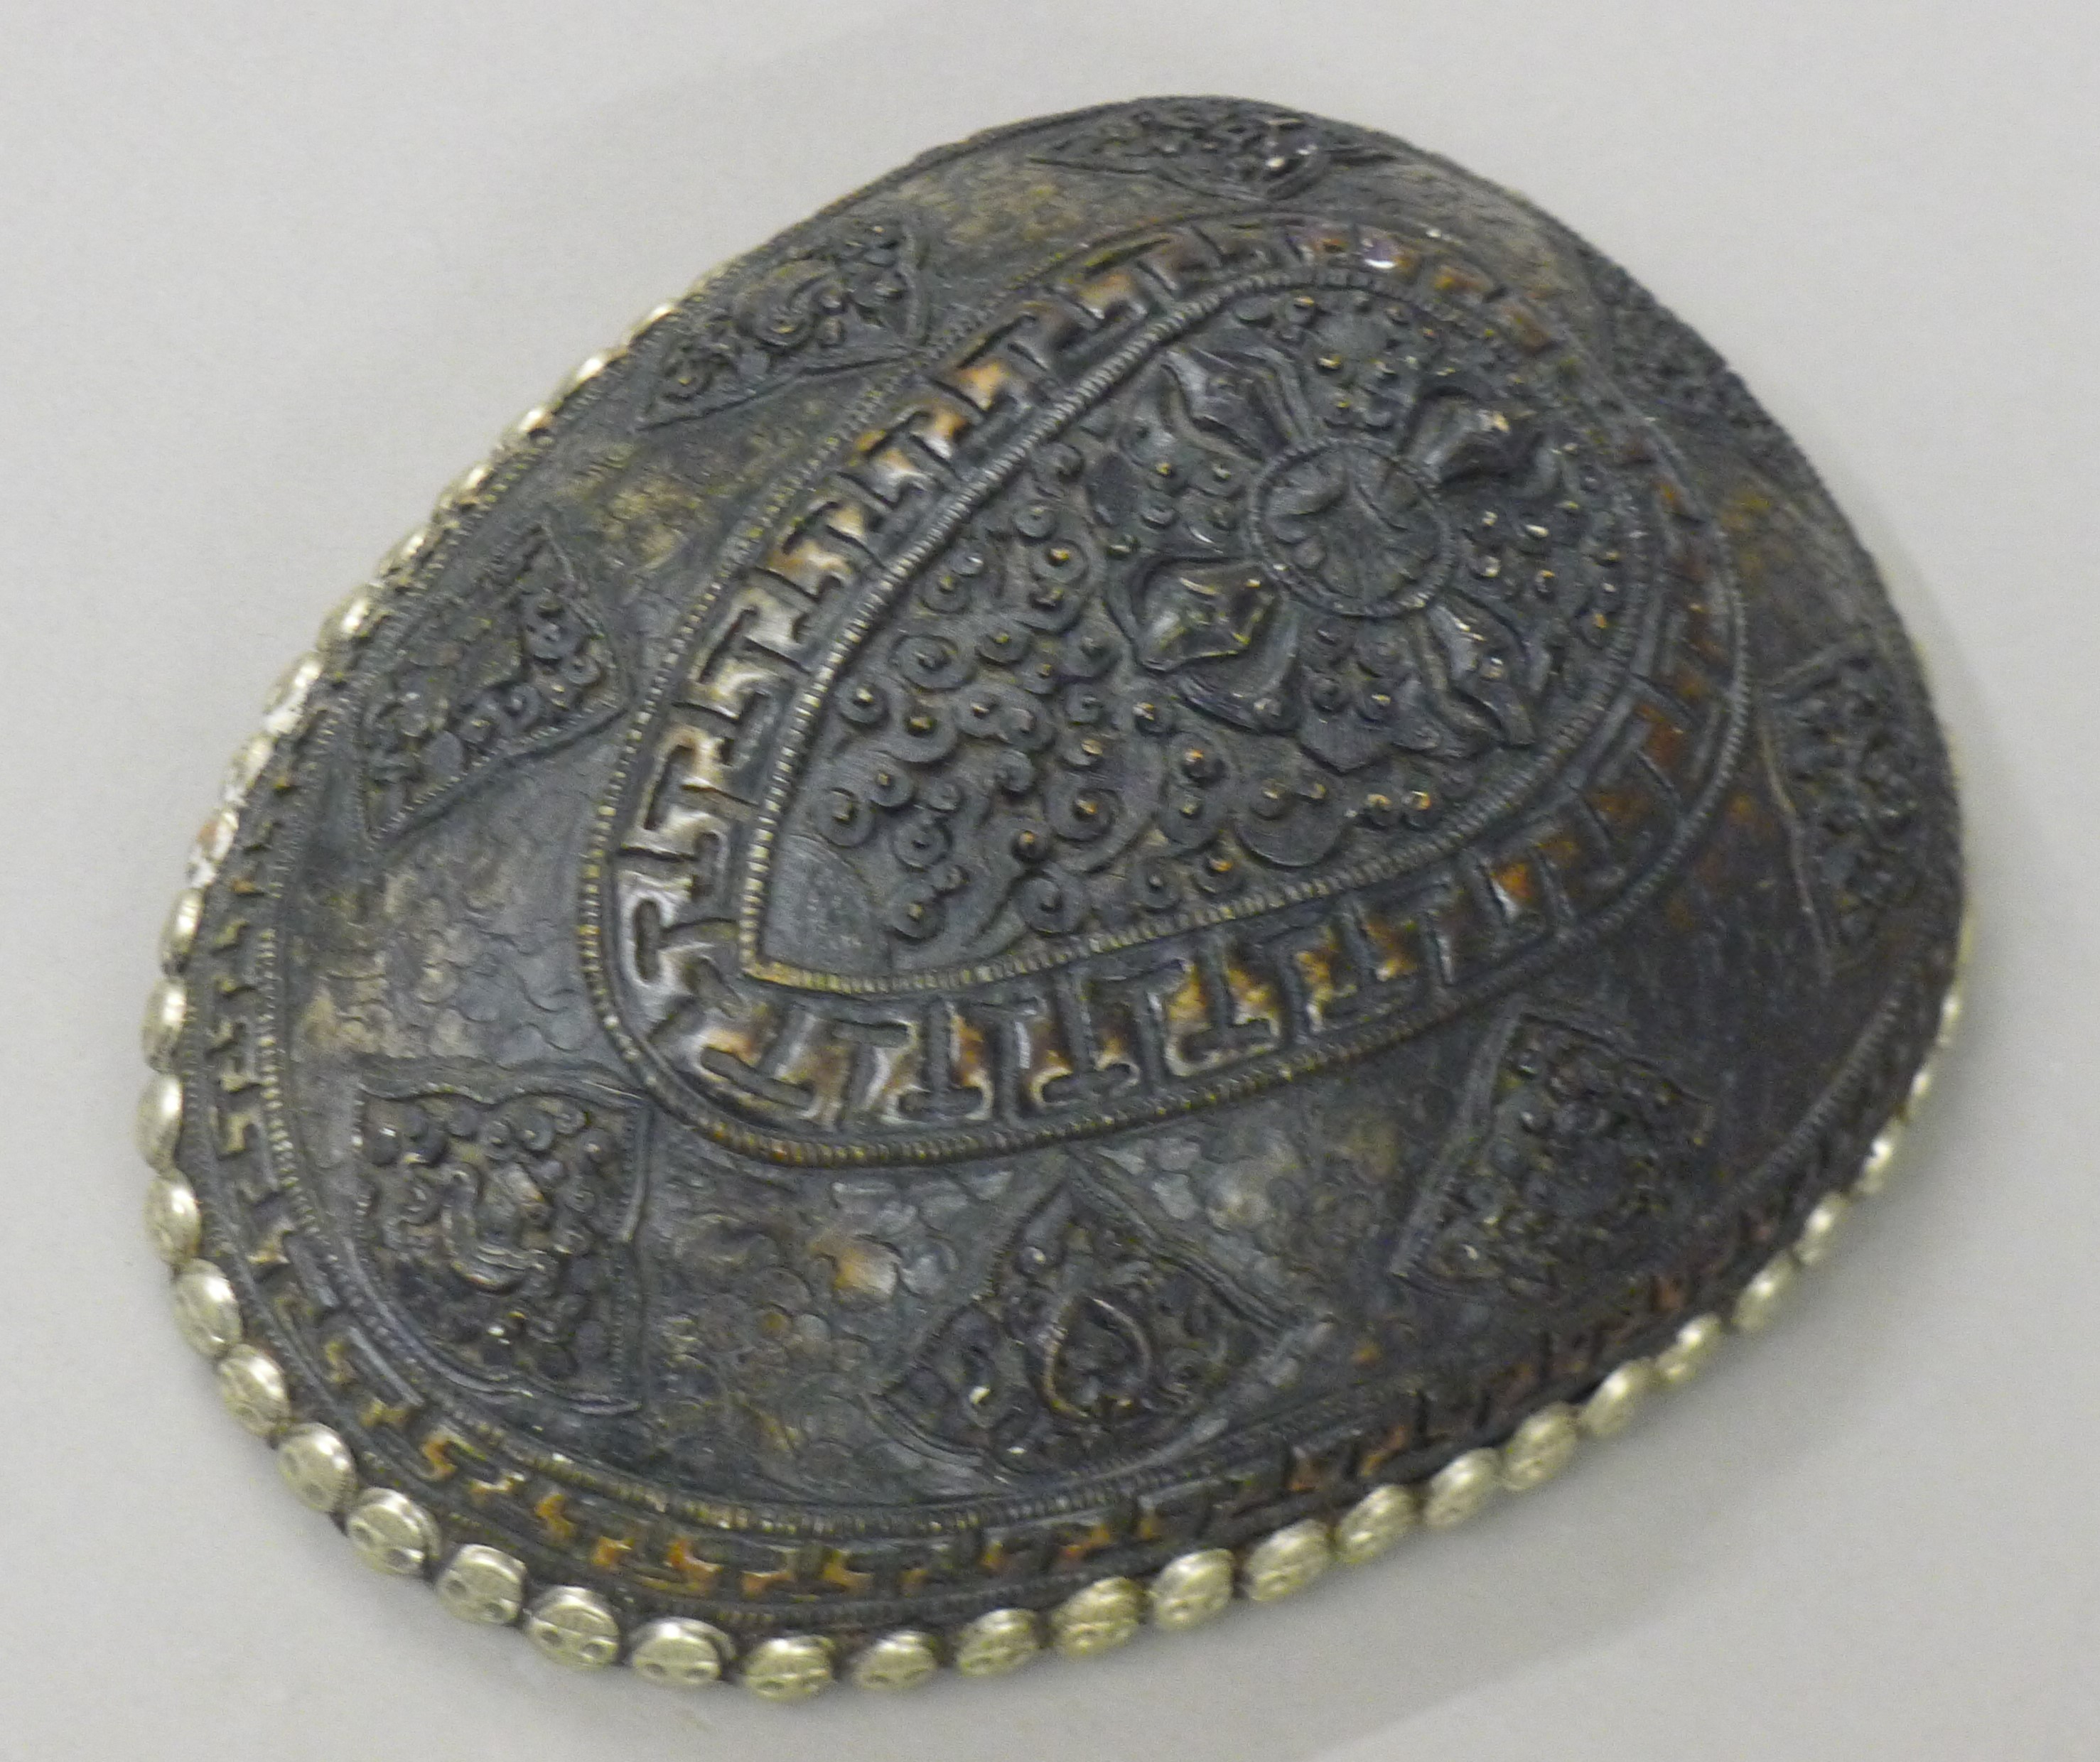 A decorative Tibetan type ornament. 13 cm wide.